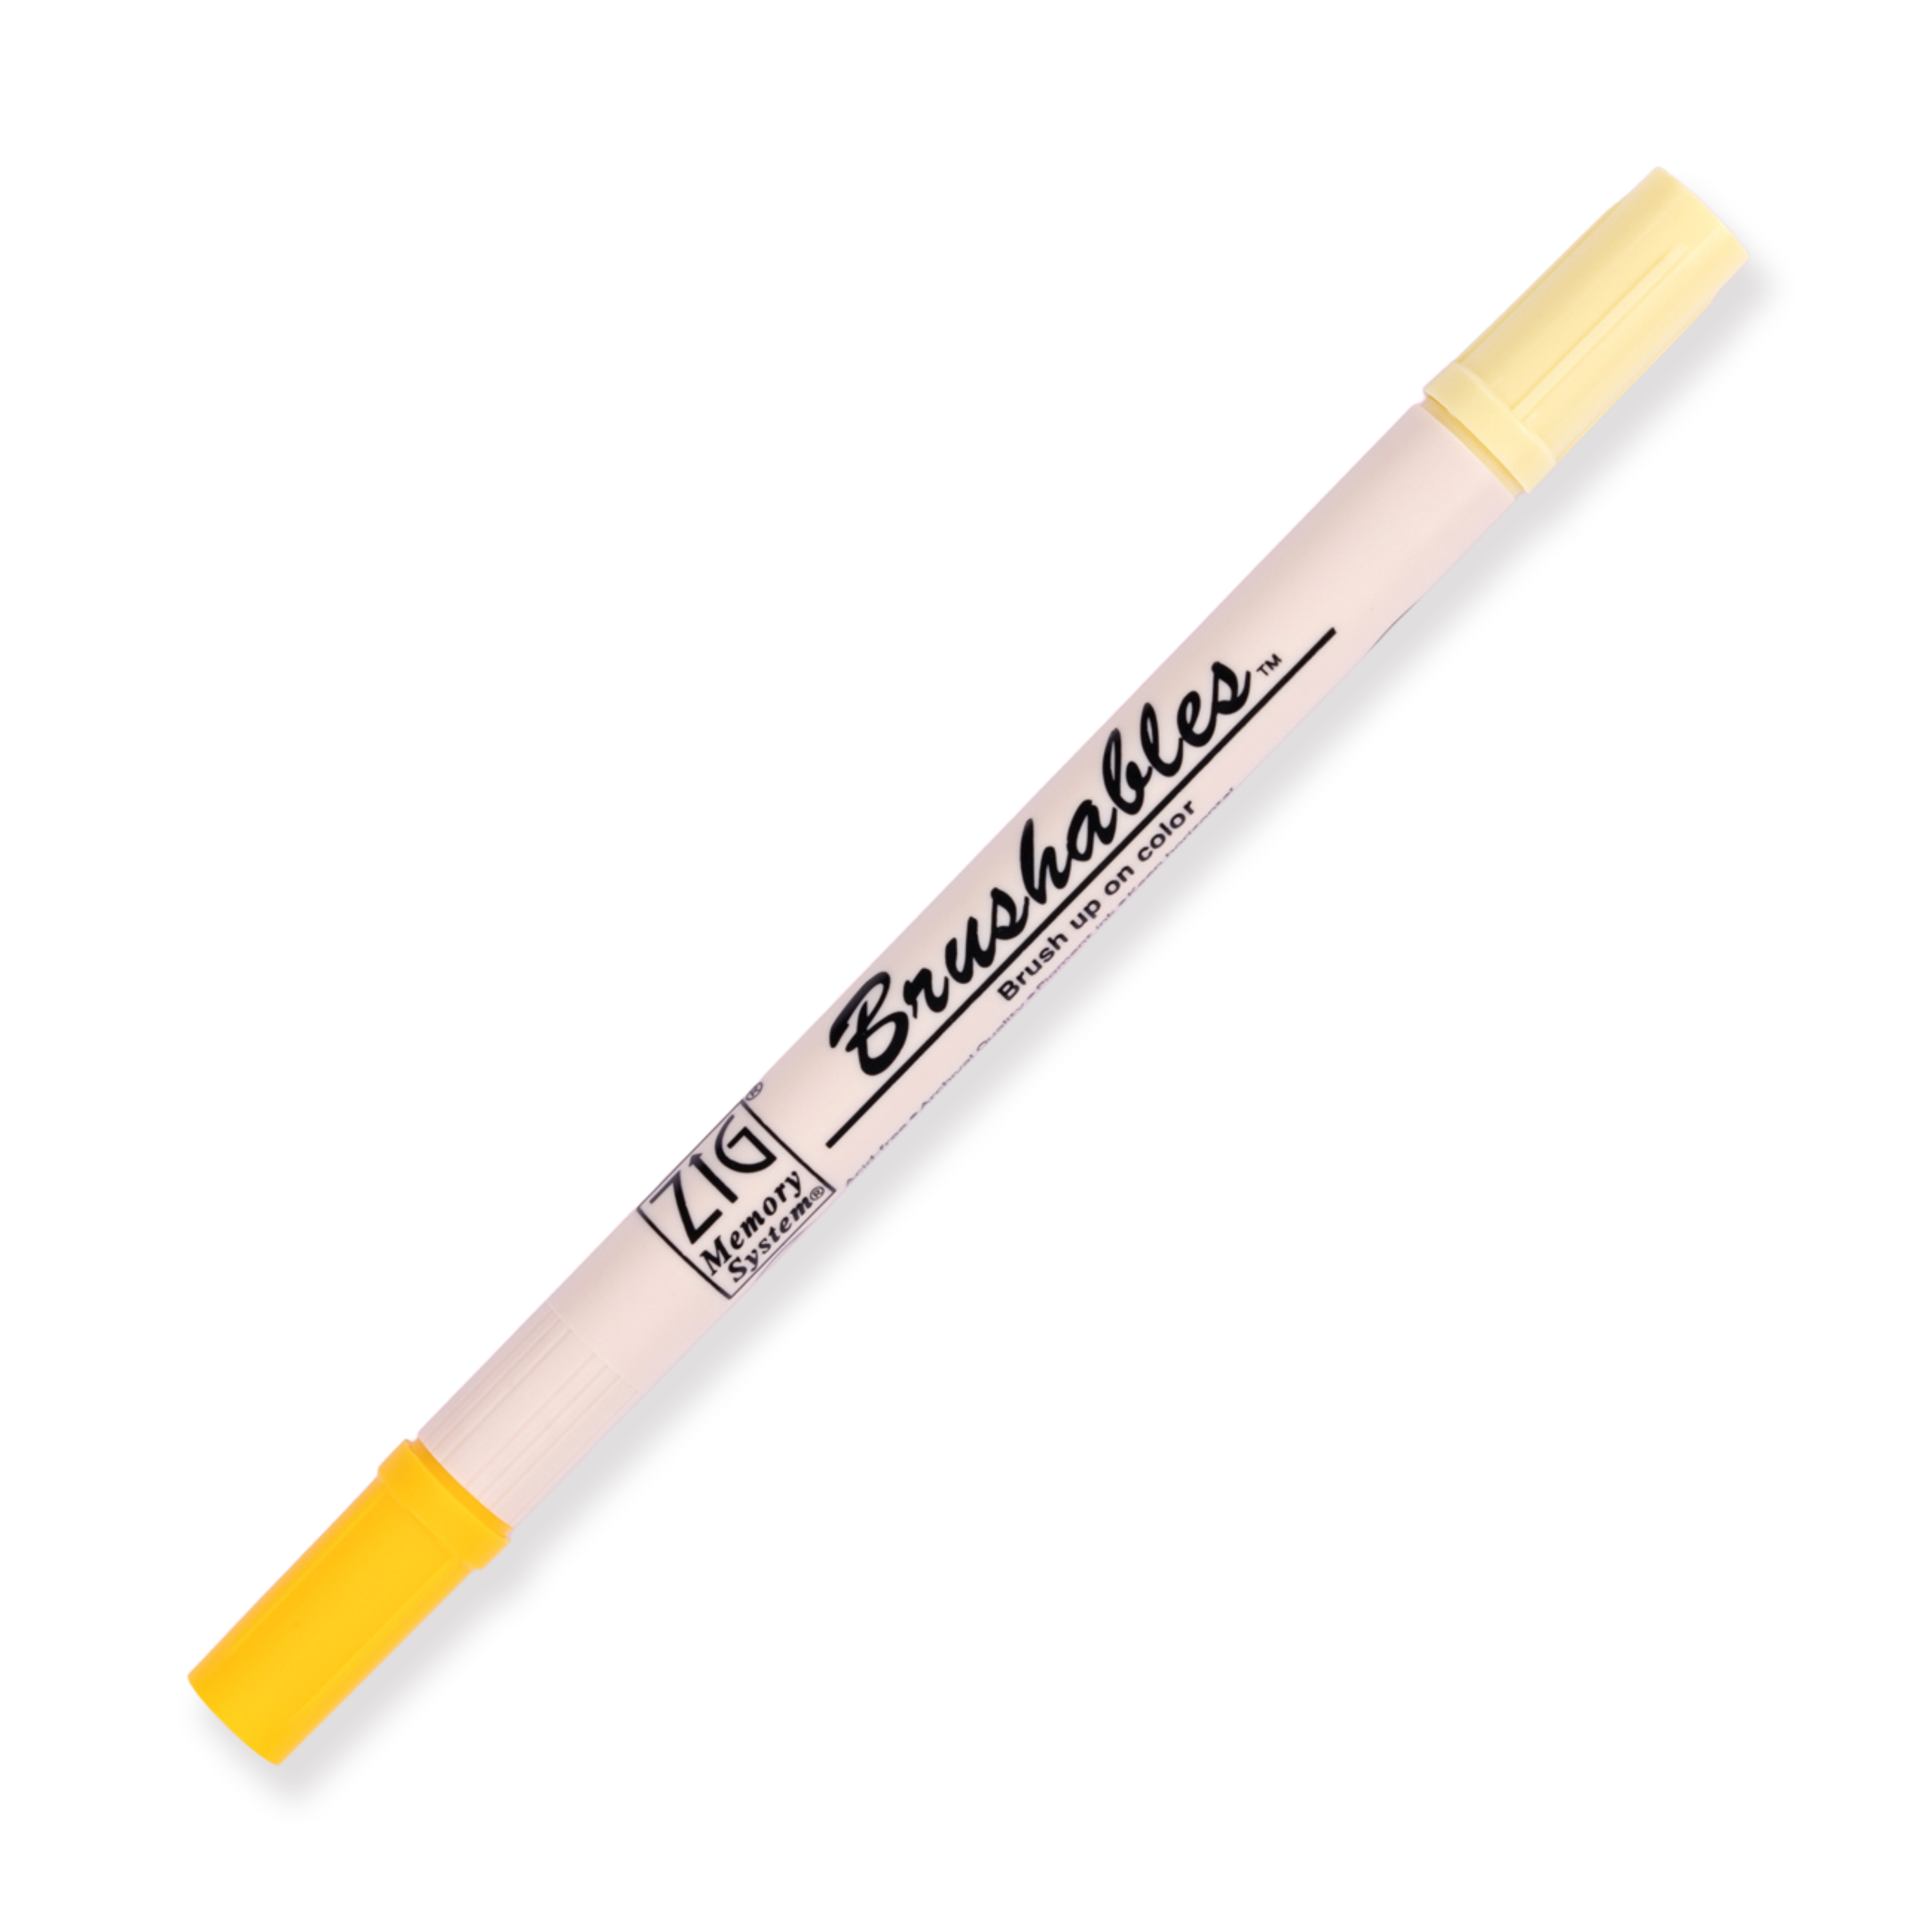 Kuretake Zig Brushables Brush Pen - Amarillo puro 050